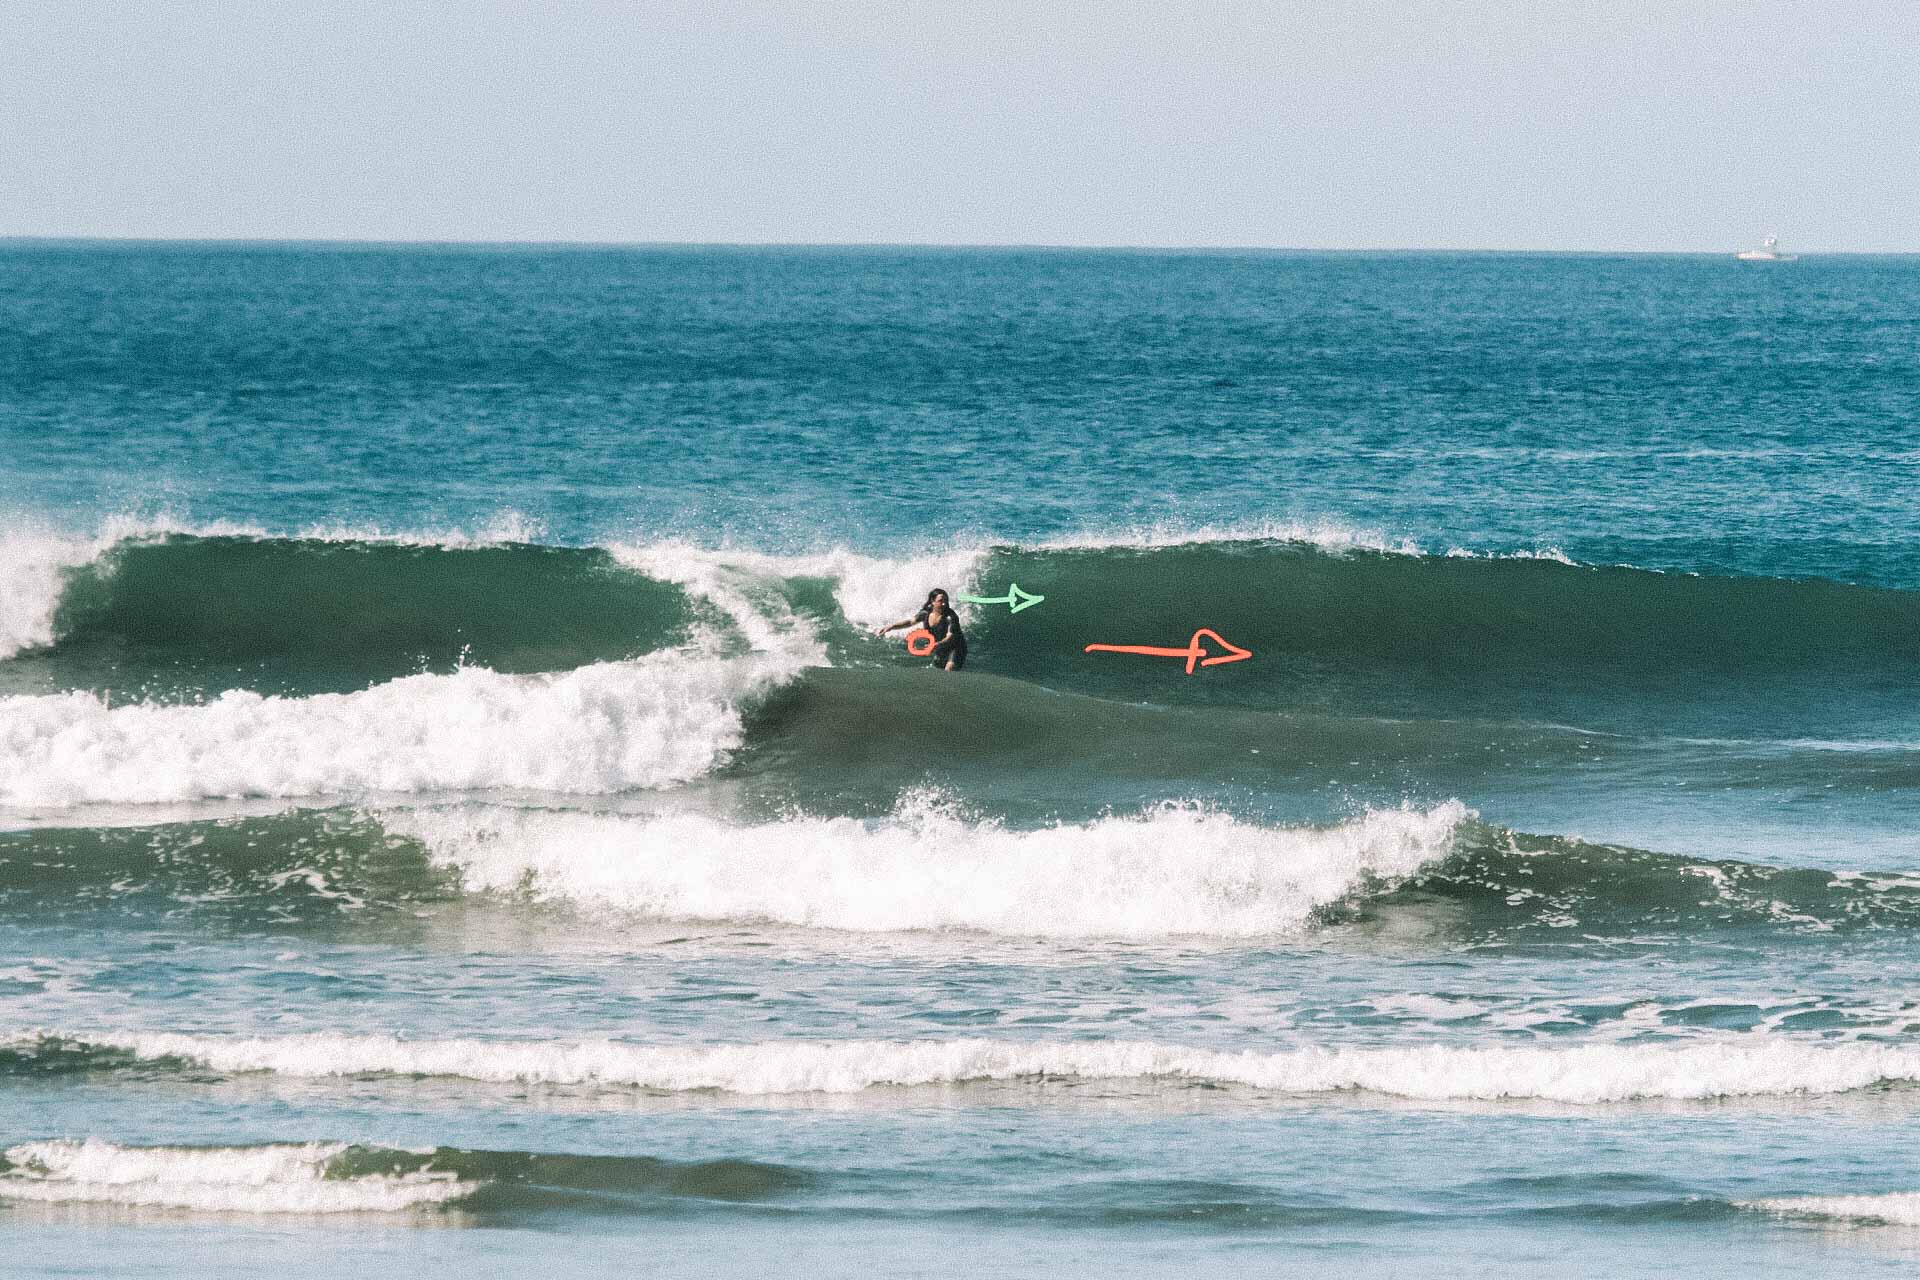 Surfer using backside technique on a wave